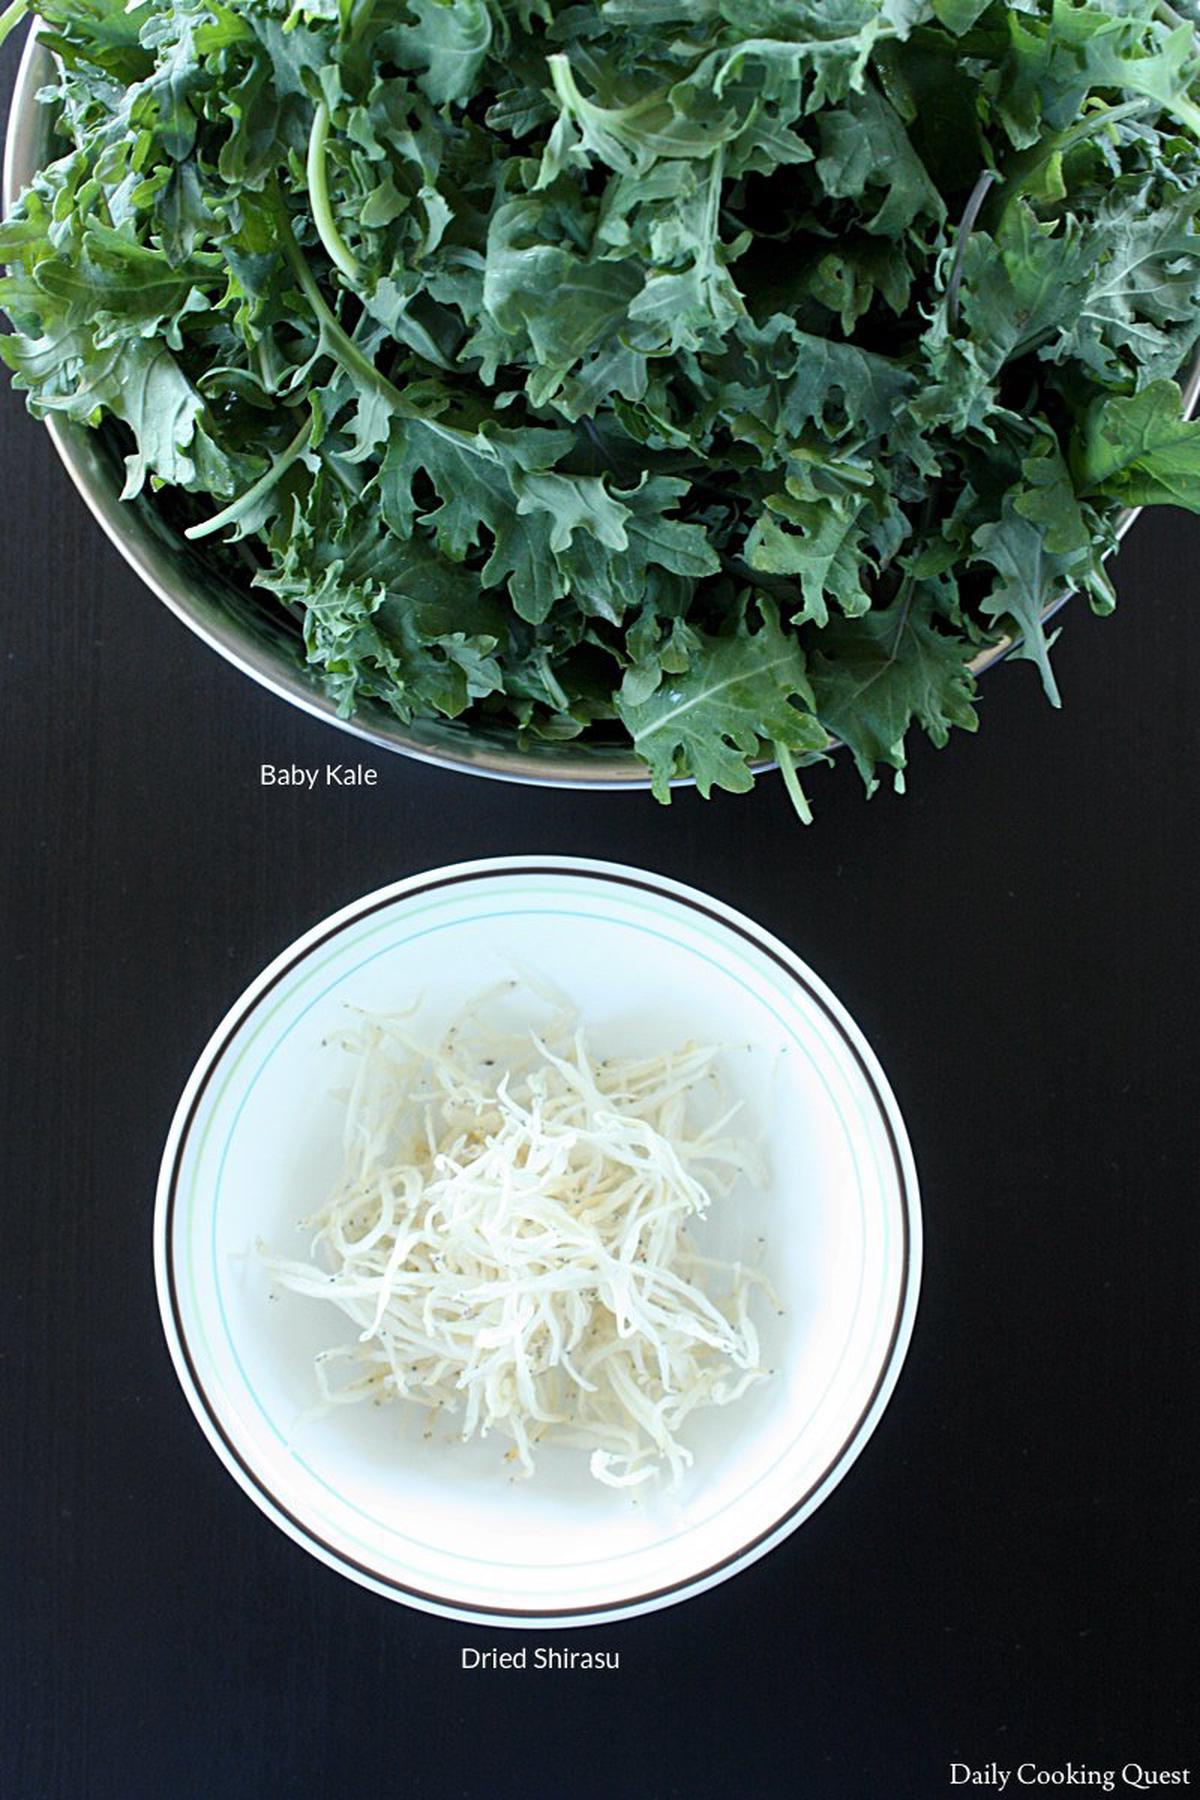 Ingredients for Sautéed Kale and Shirasu